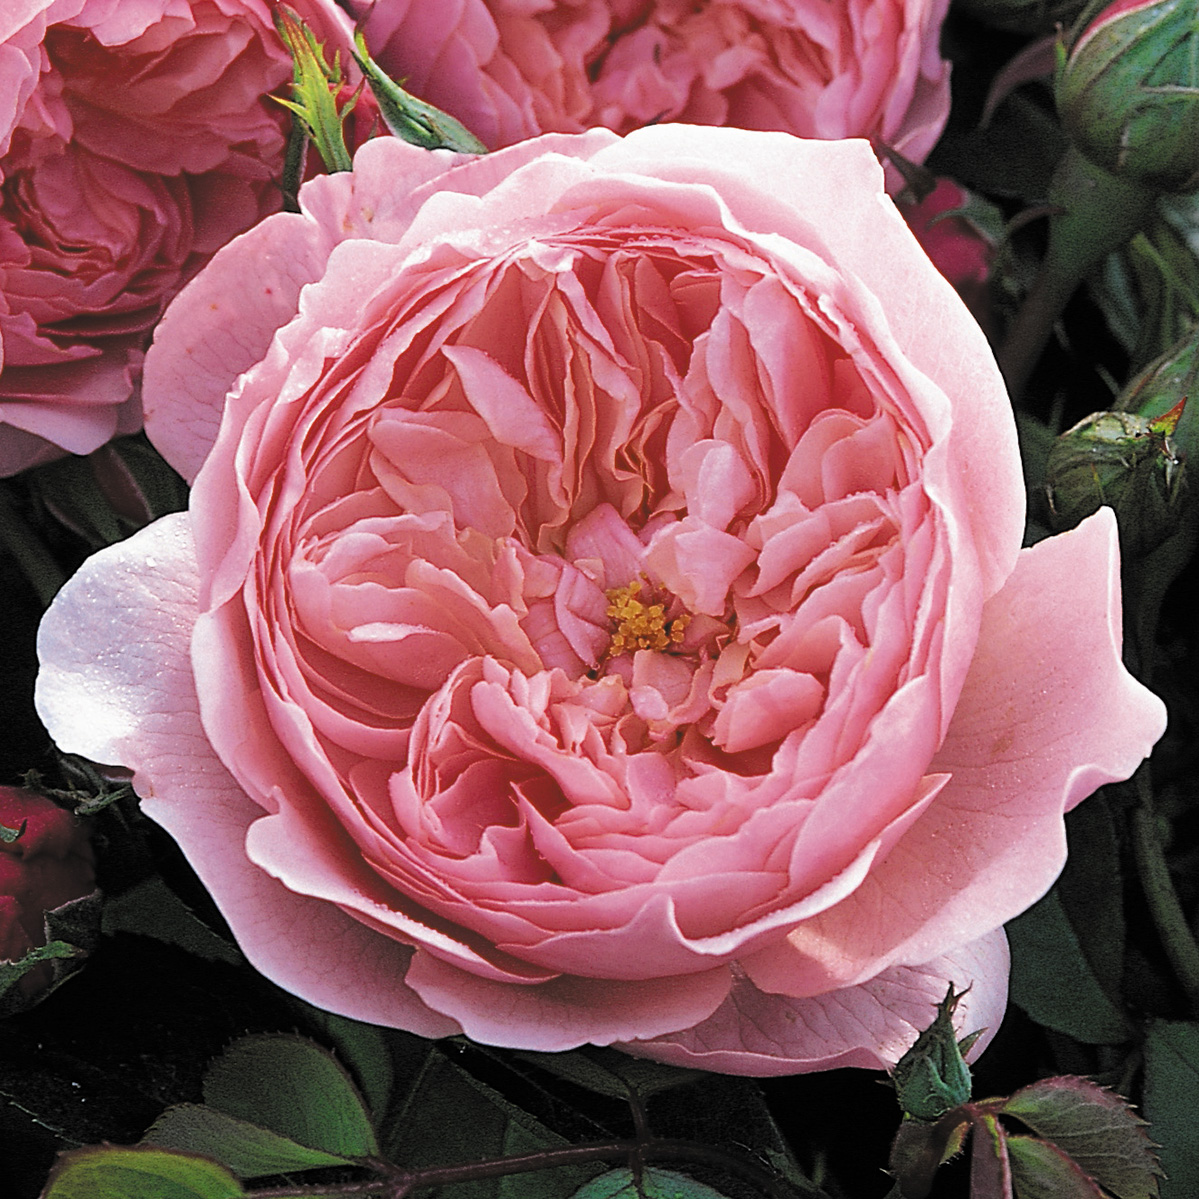 The Alnwick rose